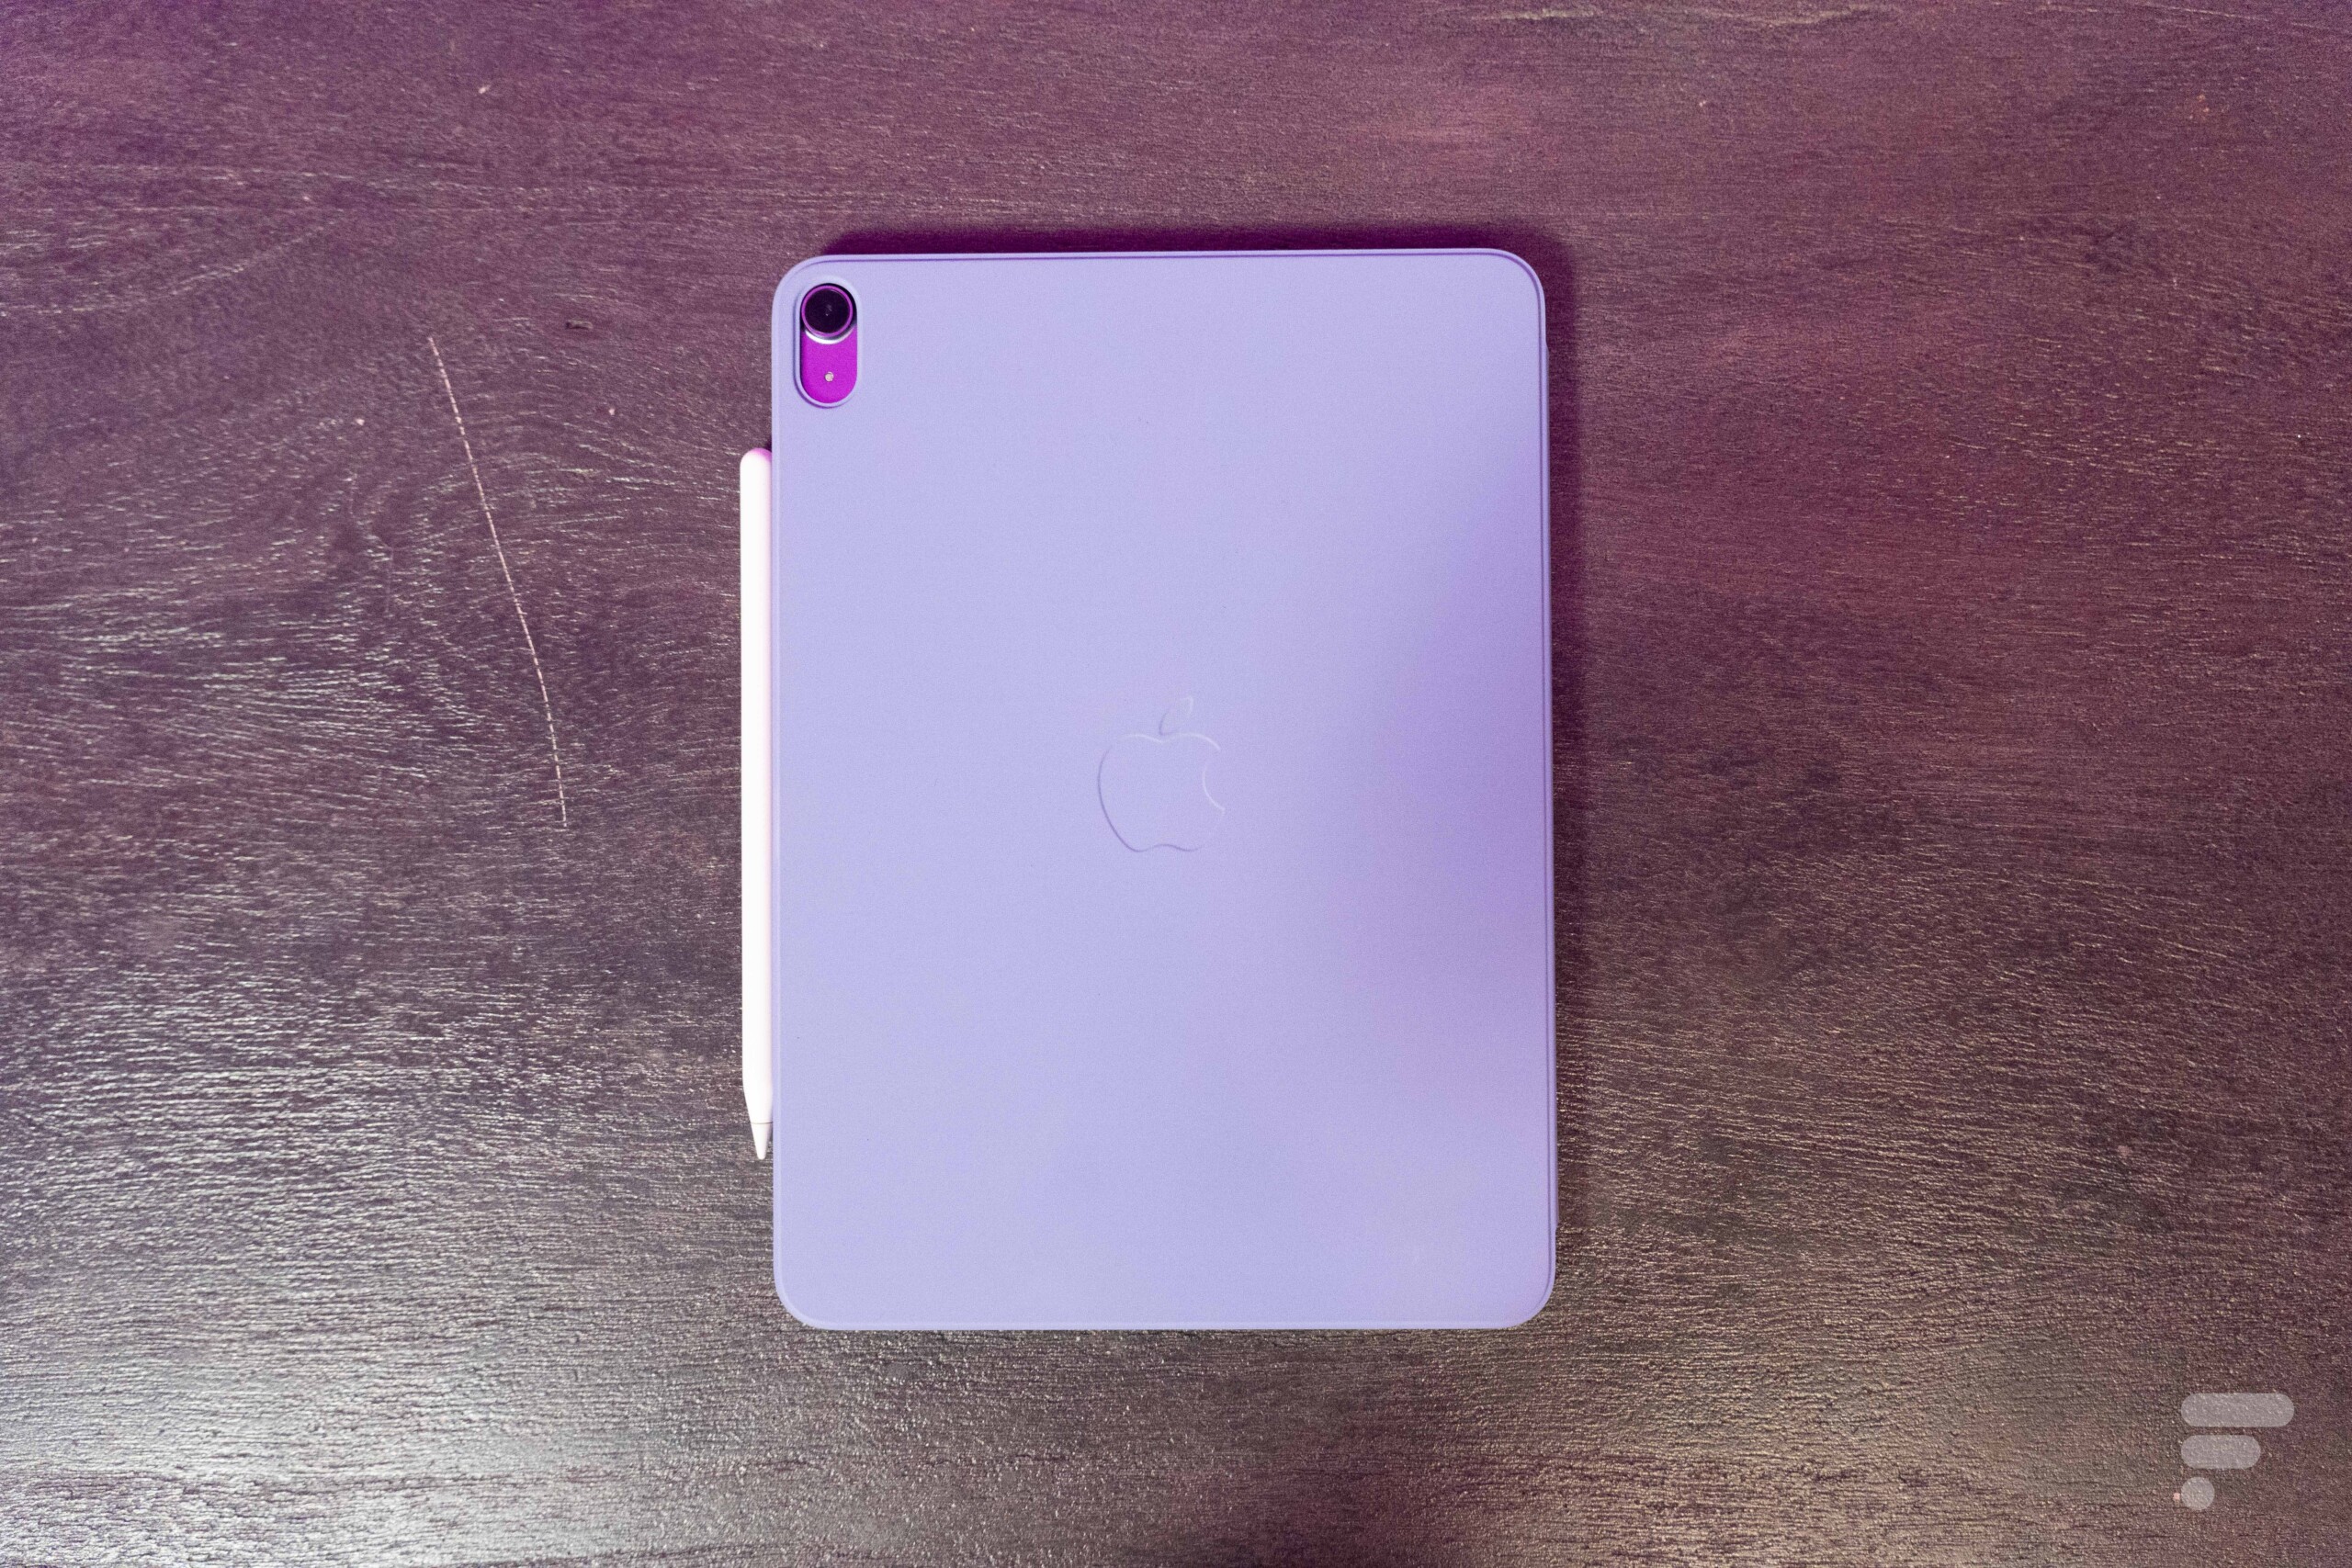 Test Apple iPad Air M1 (2022) : notre avis complet - Tablettes tactiles -  Frandroid